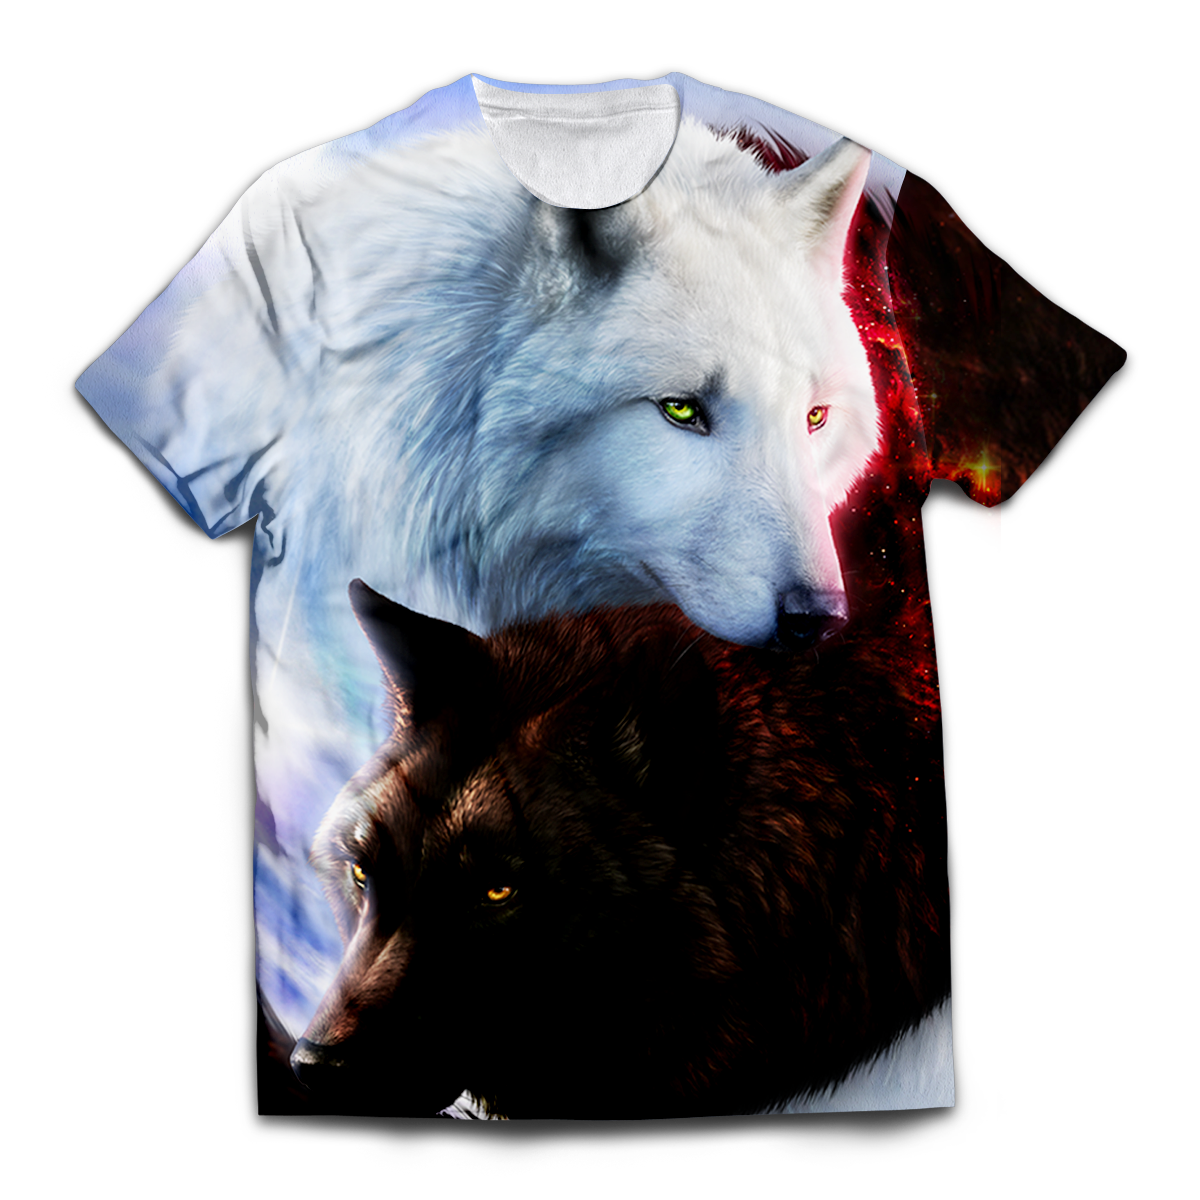 Yin Yang Fire Ice Wolves Unisex T-Shirt M